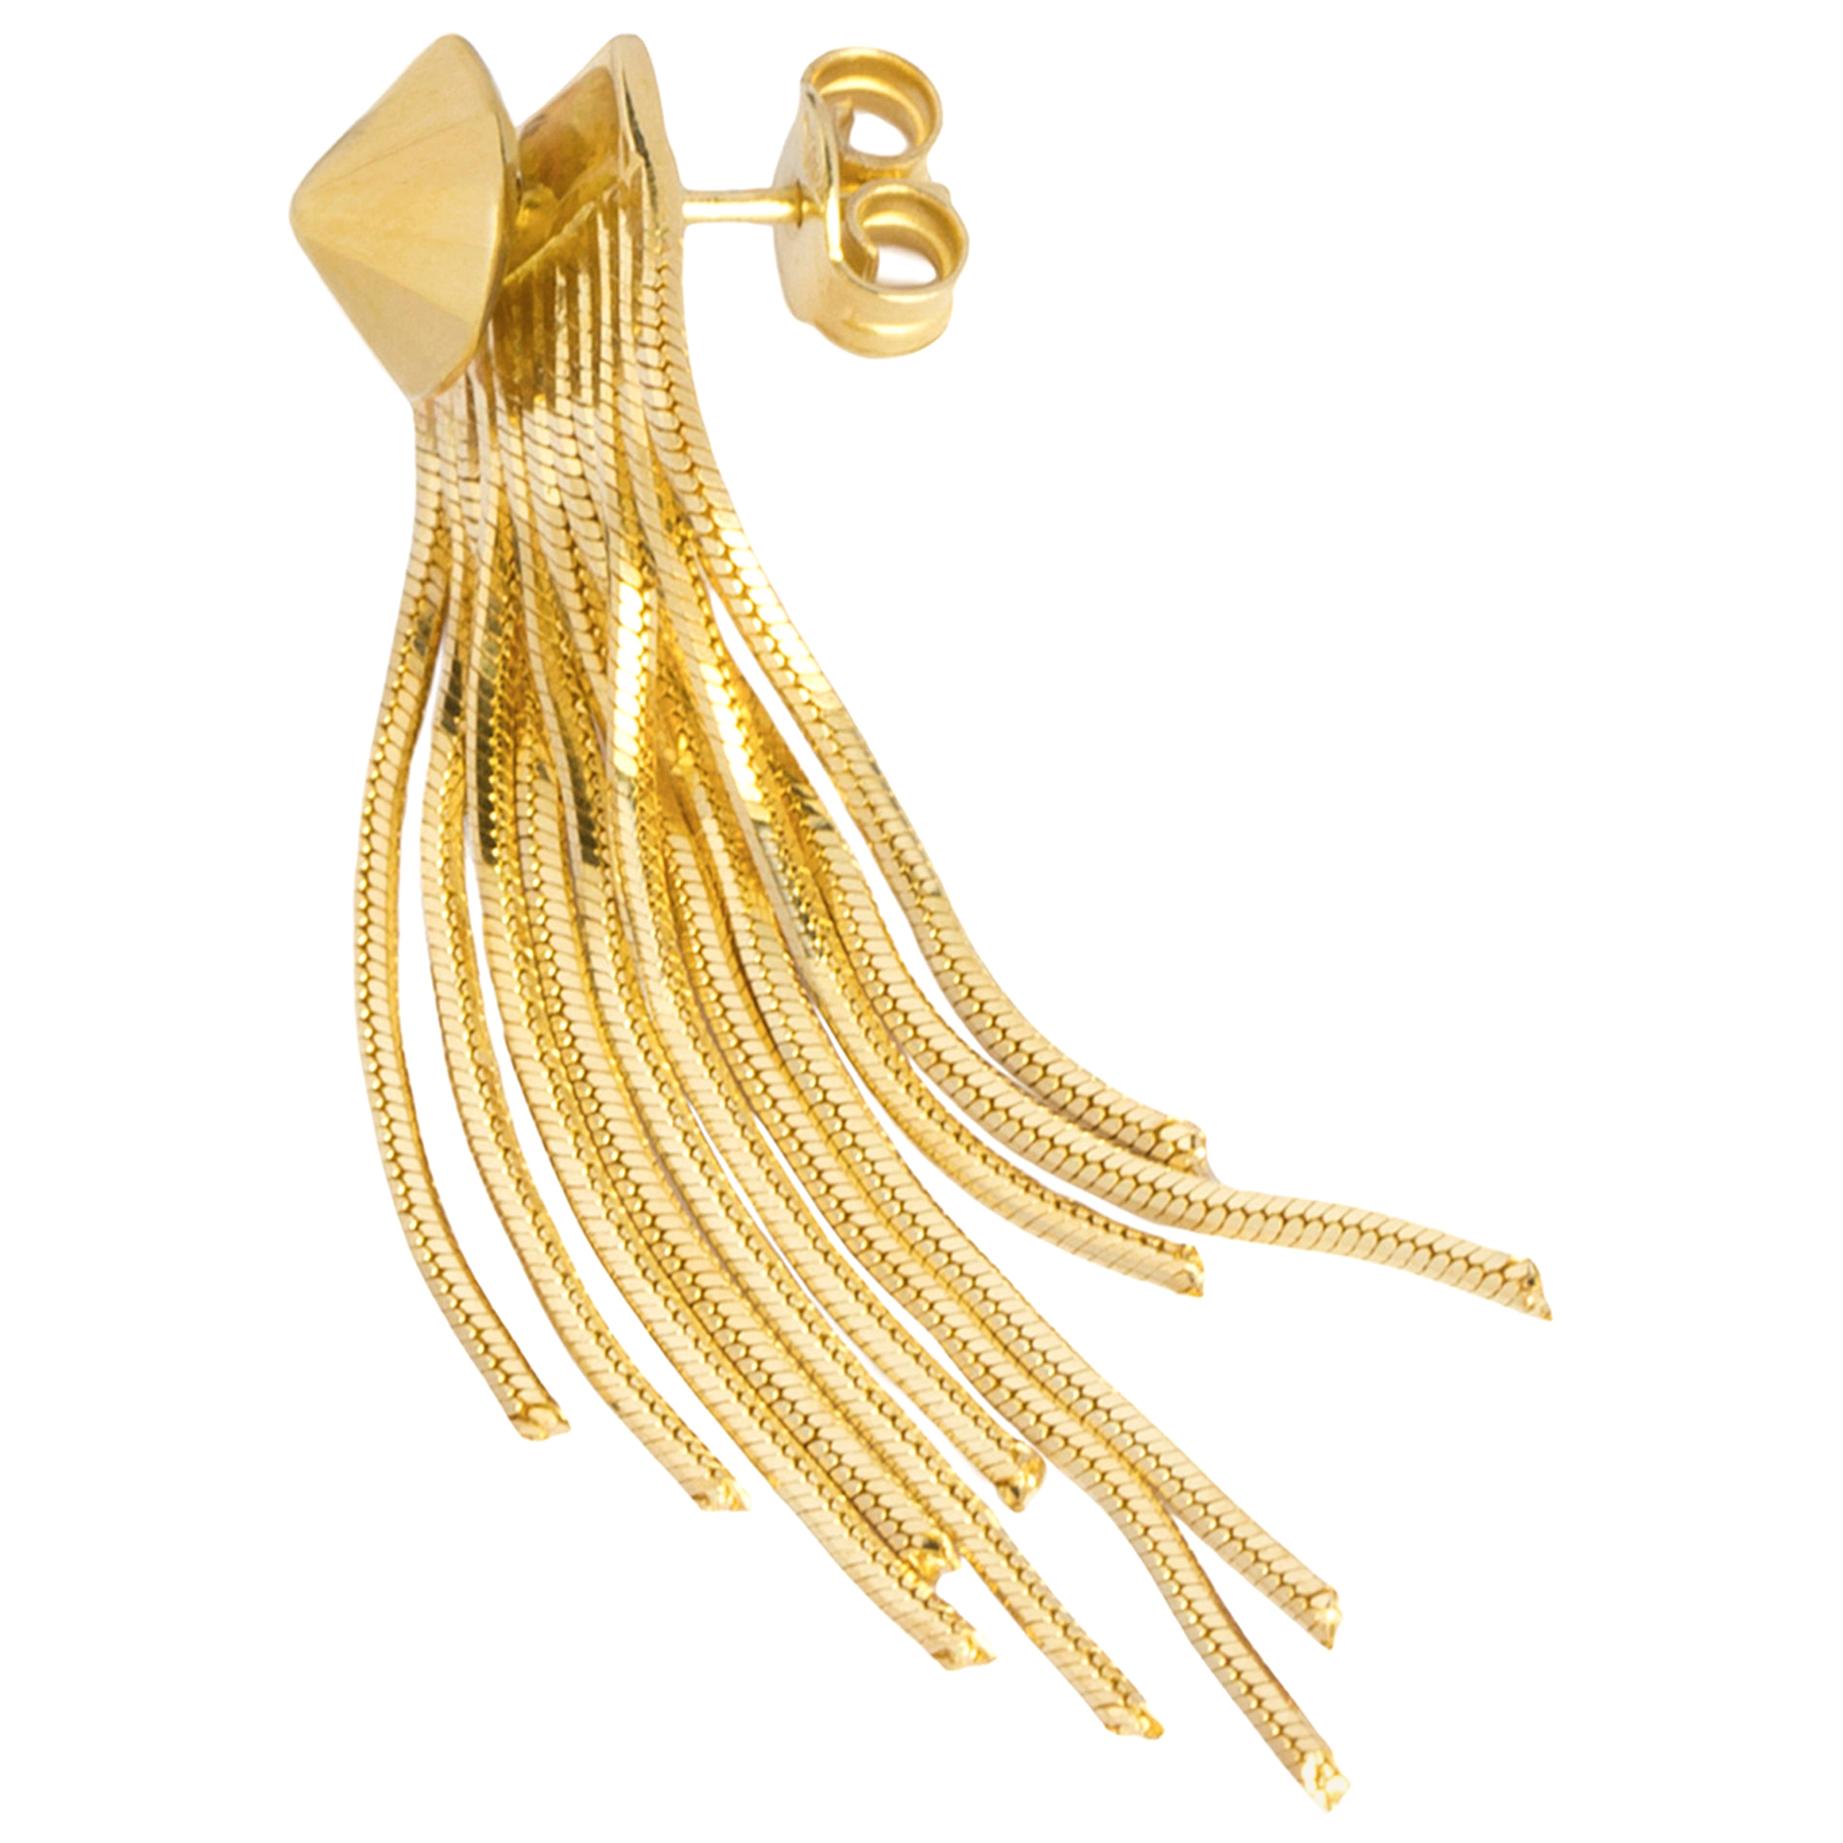 Iconic Design 18 Karat Gold Fringed Single Studded Earring from Iosselliani